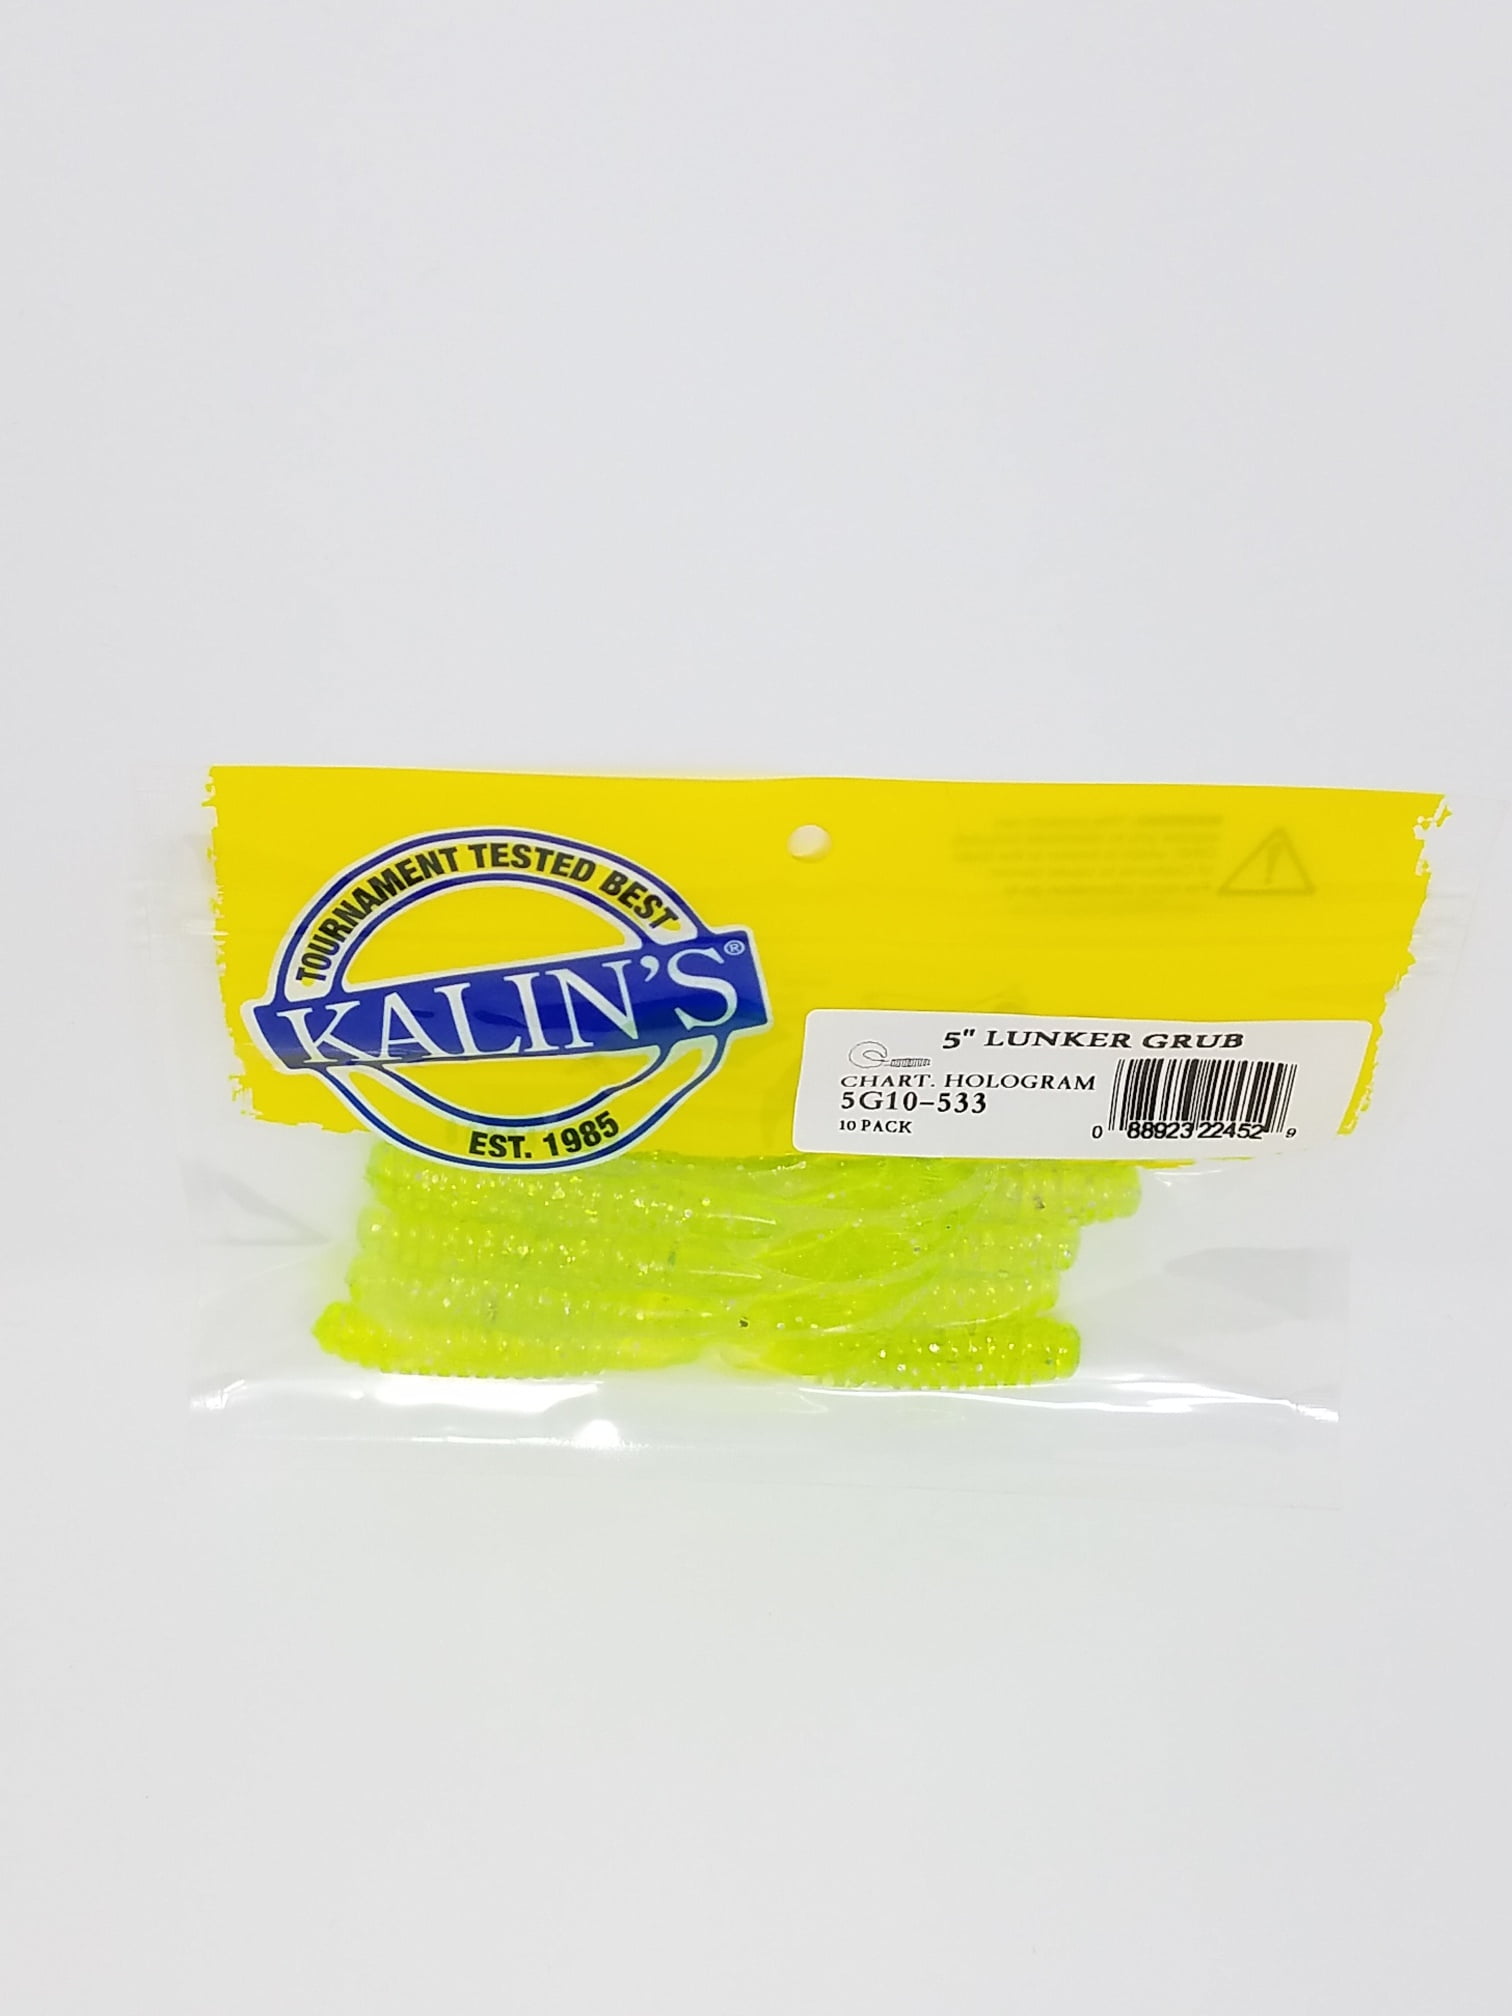 Kalin's Chartreuse & Hologram Lunker Grub - 5